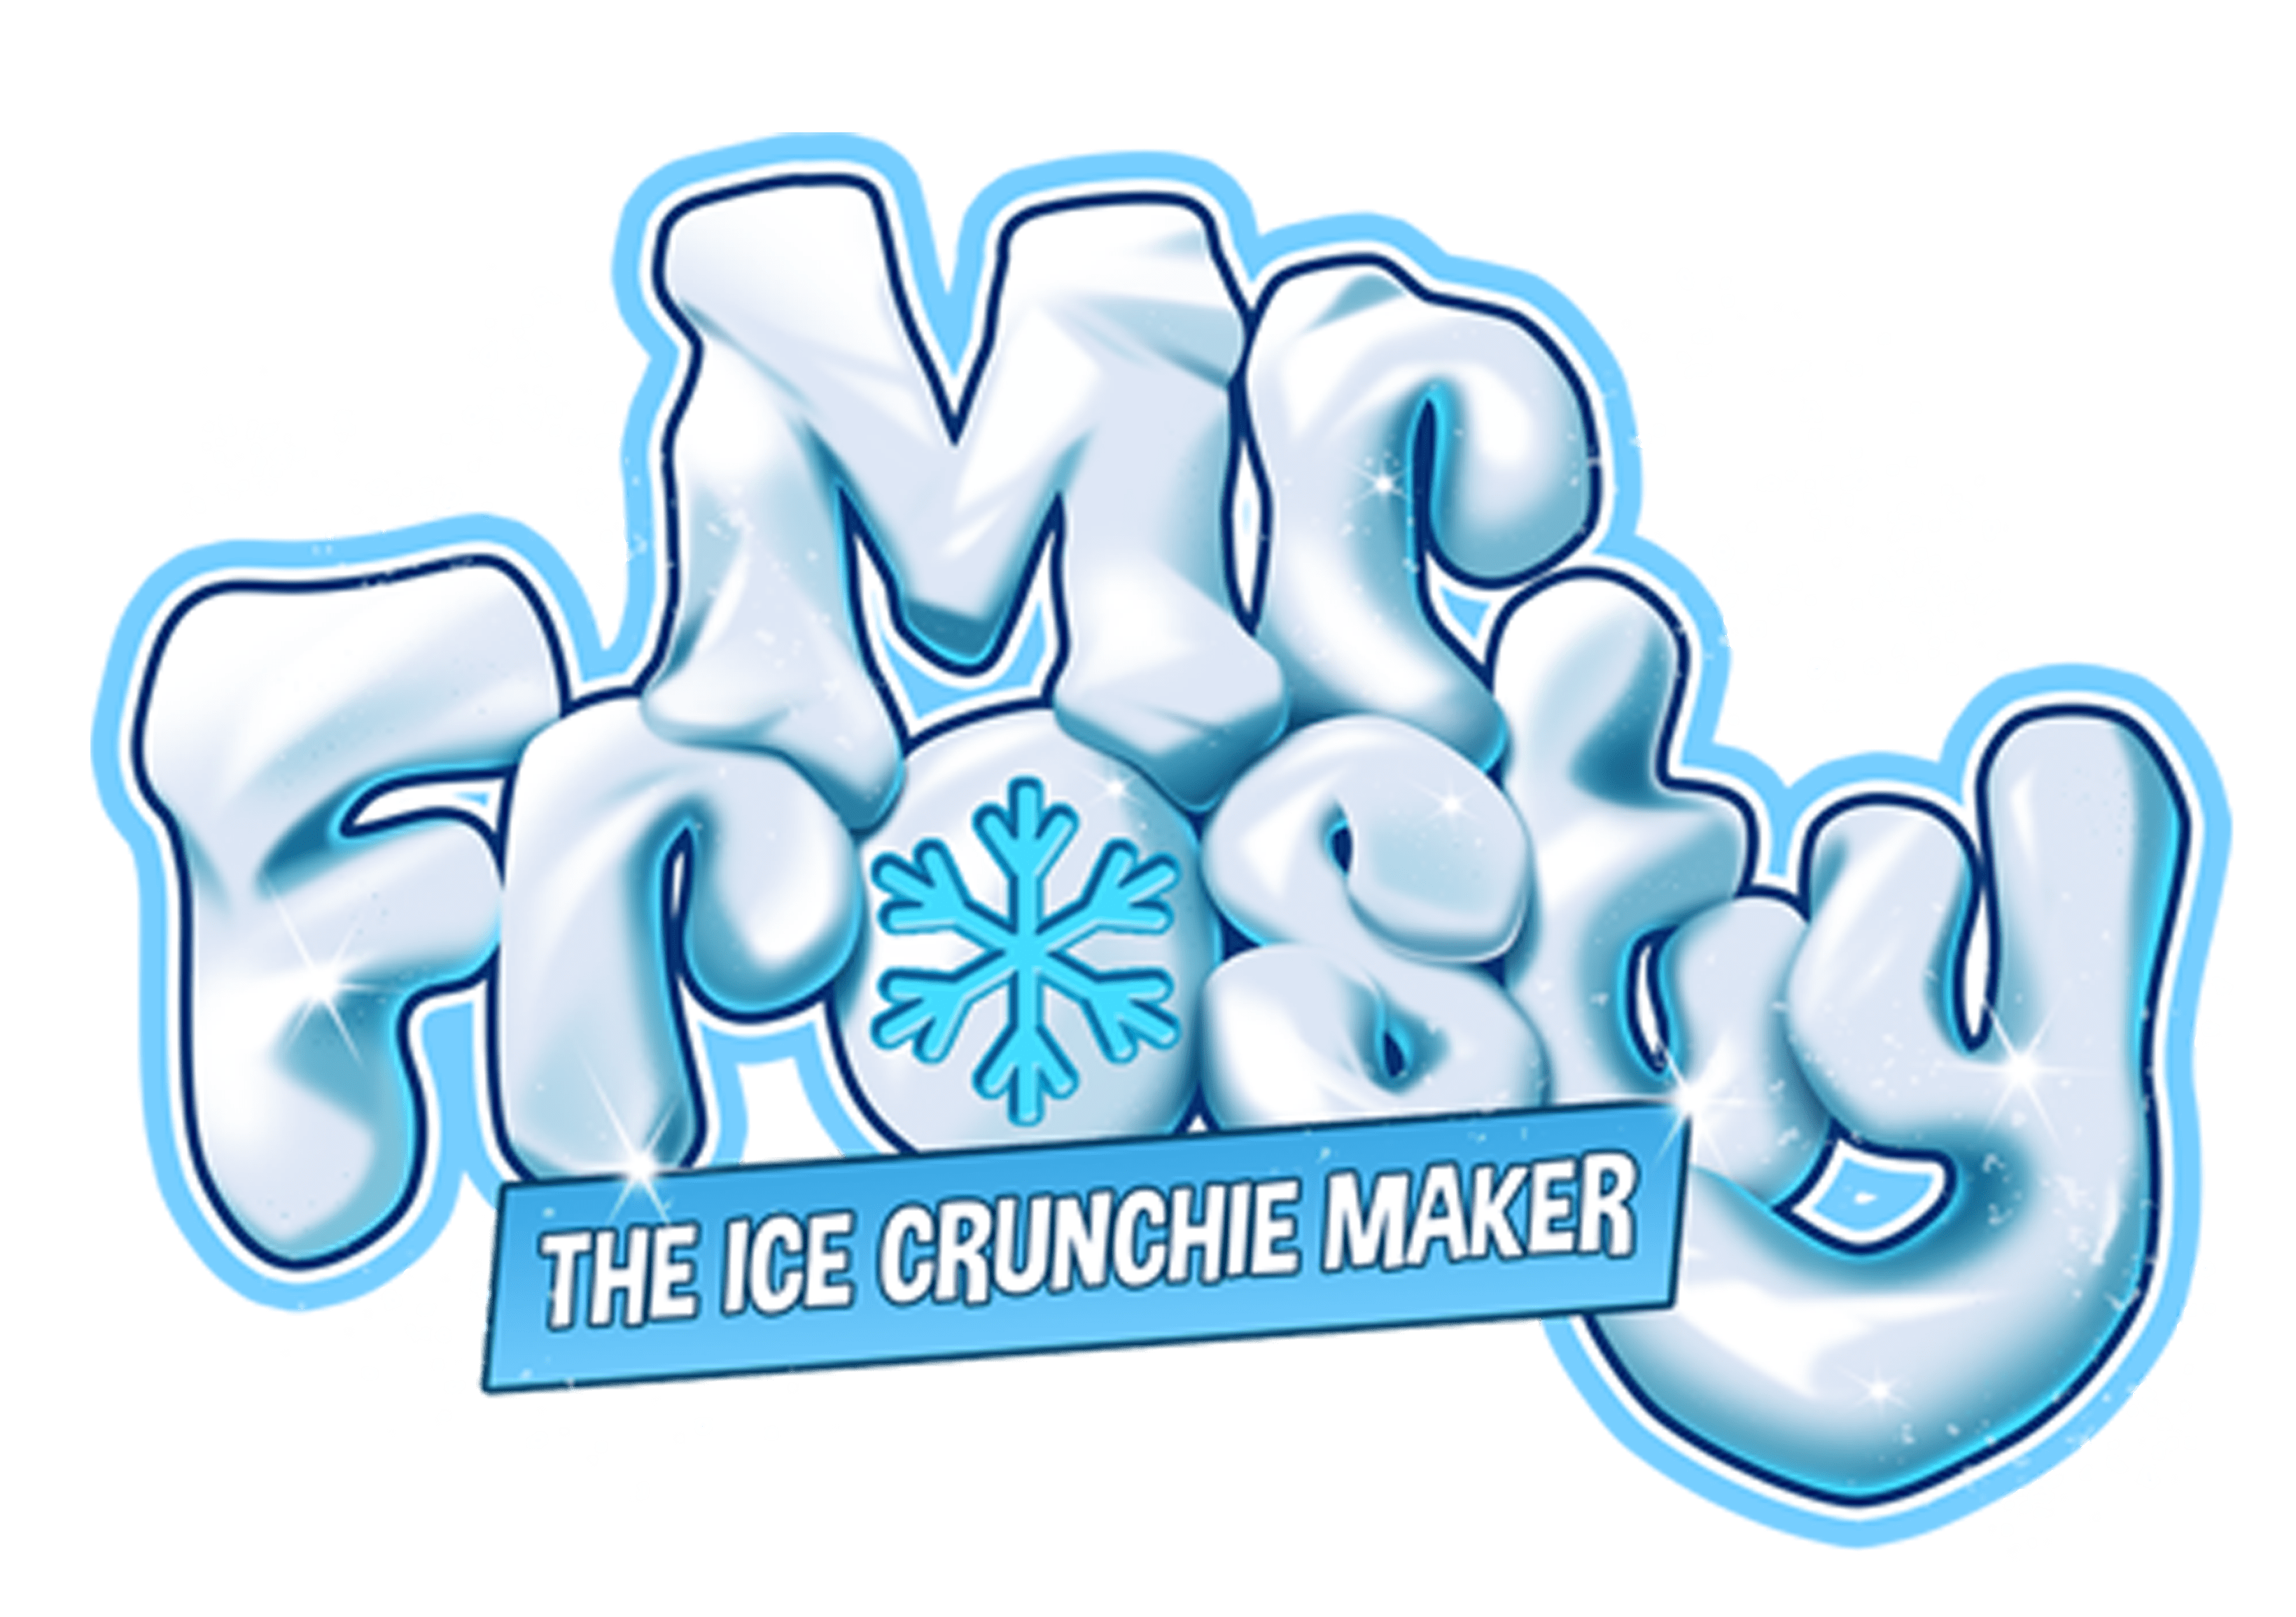 Mr Frosty Ice Crunchy Maker Review